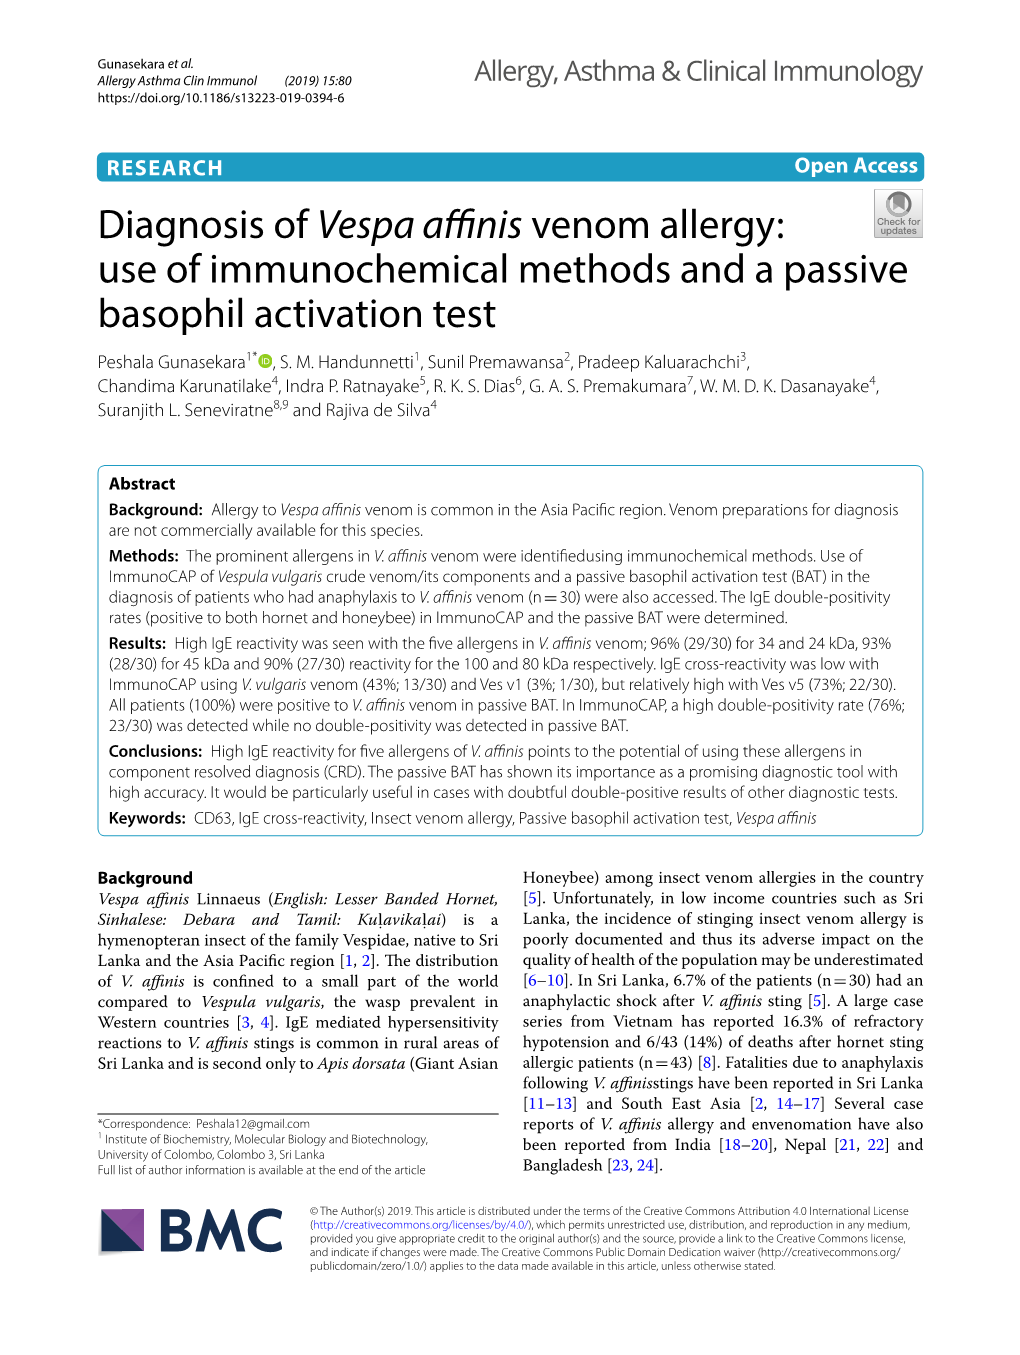 Diagnosis of Vespa Affinis Venom Allergy: Use of Immunochemical